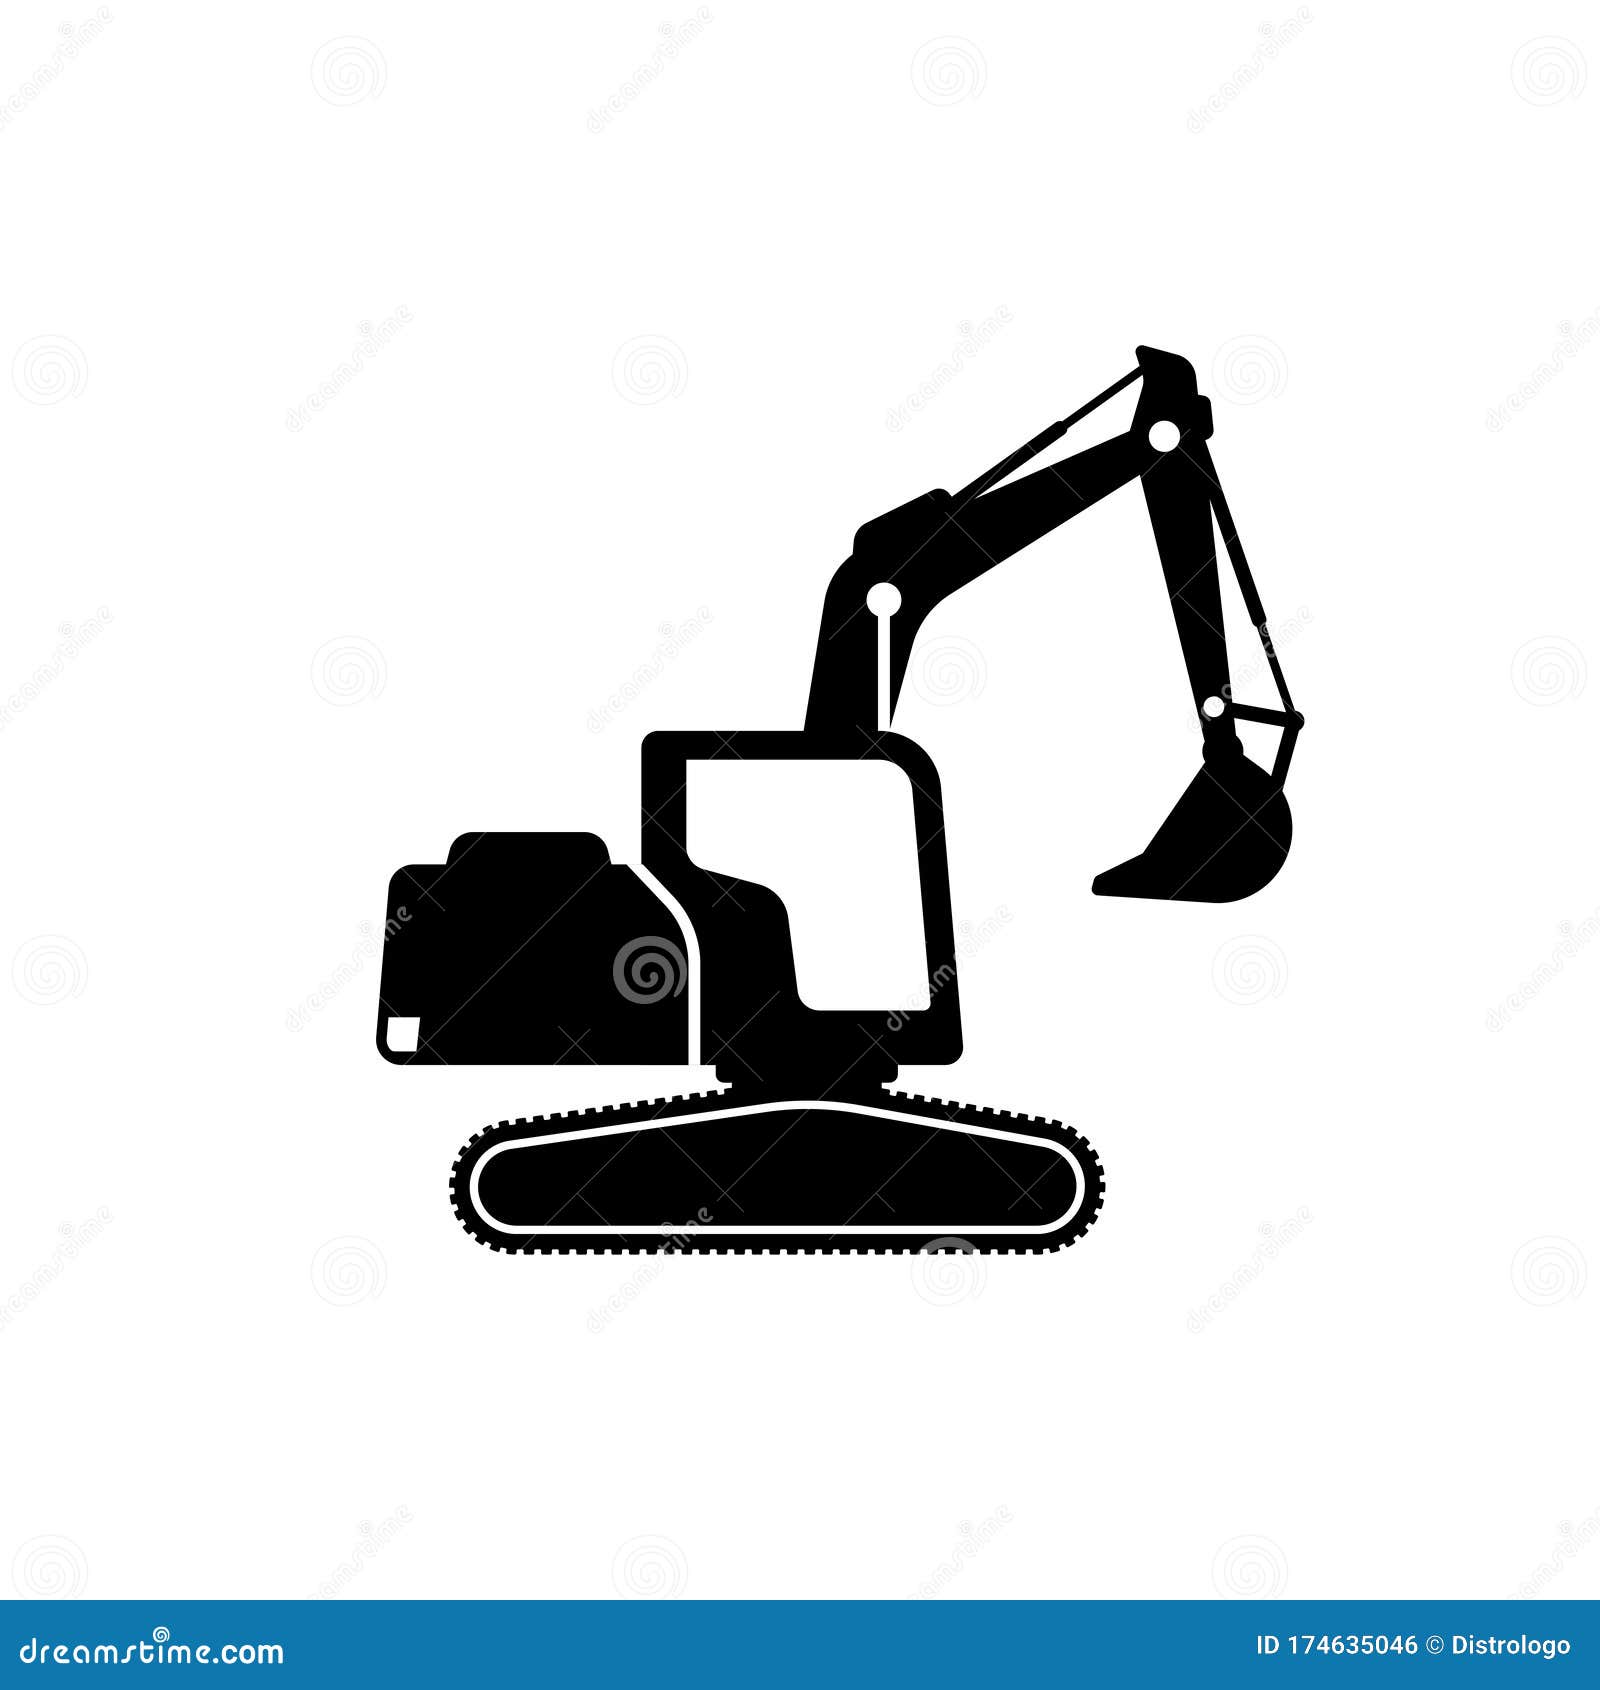 Download Silhouette Of Excavator Vector Design. Excavator Icon Sign ...